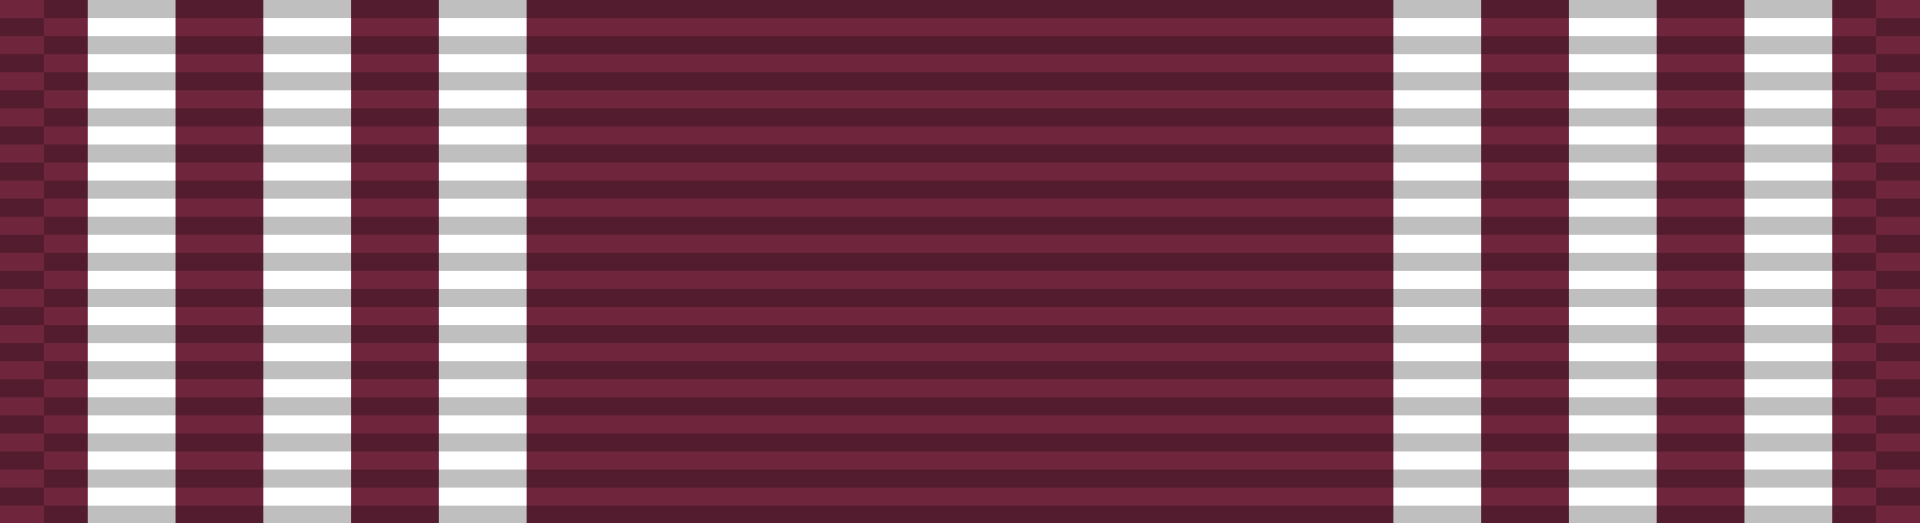 WW2 Victory Medal